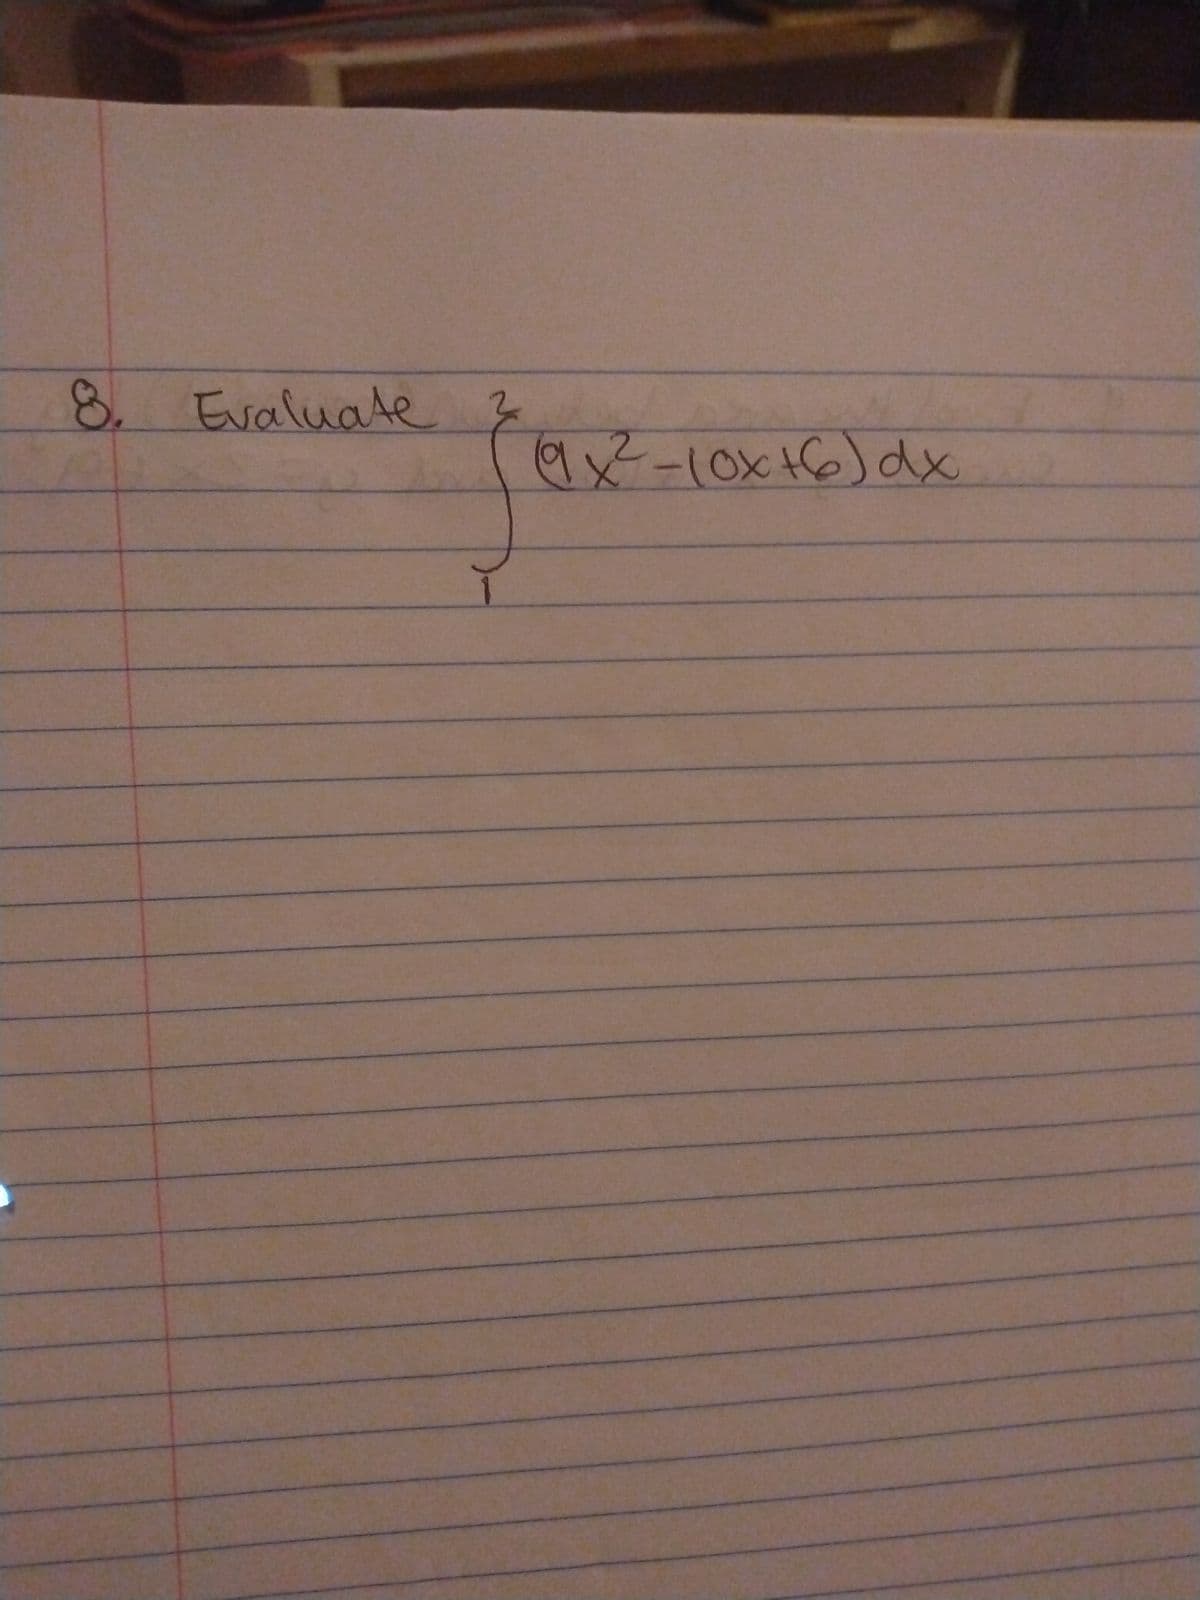 8. Evaluate
2
(9x²-10x+6) dx